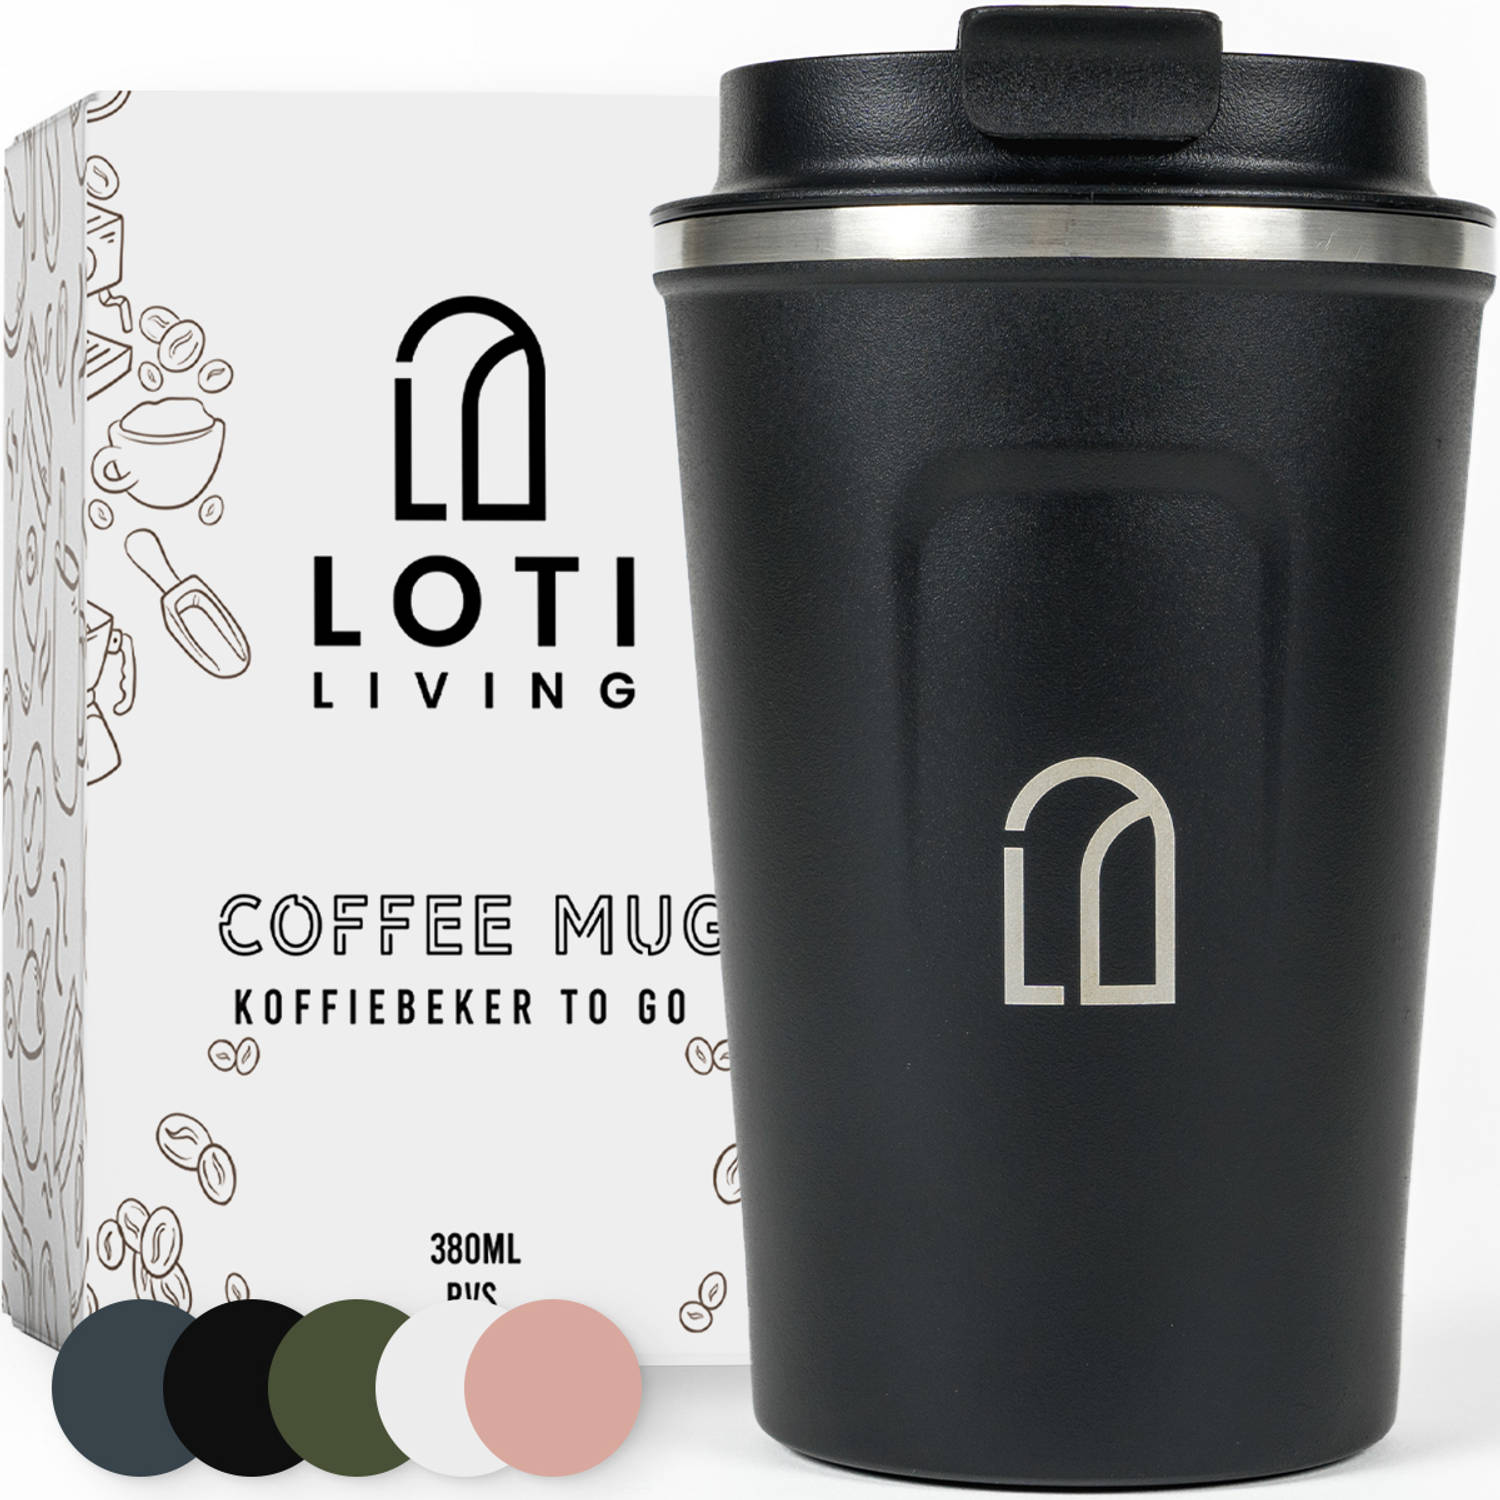 Loti Living Koffiebeker To Go - Thermosbeker - Koffiebeker onderweg - Theebeker - Travel mug - 380ml - Zwart